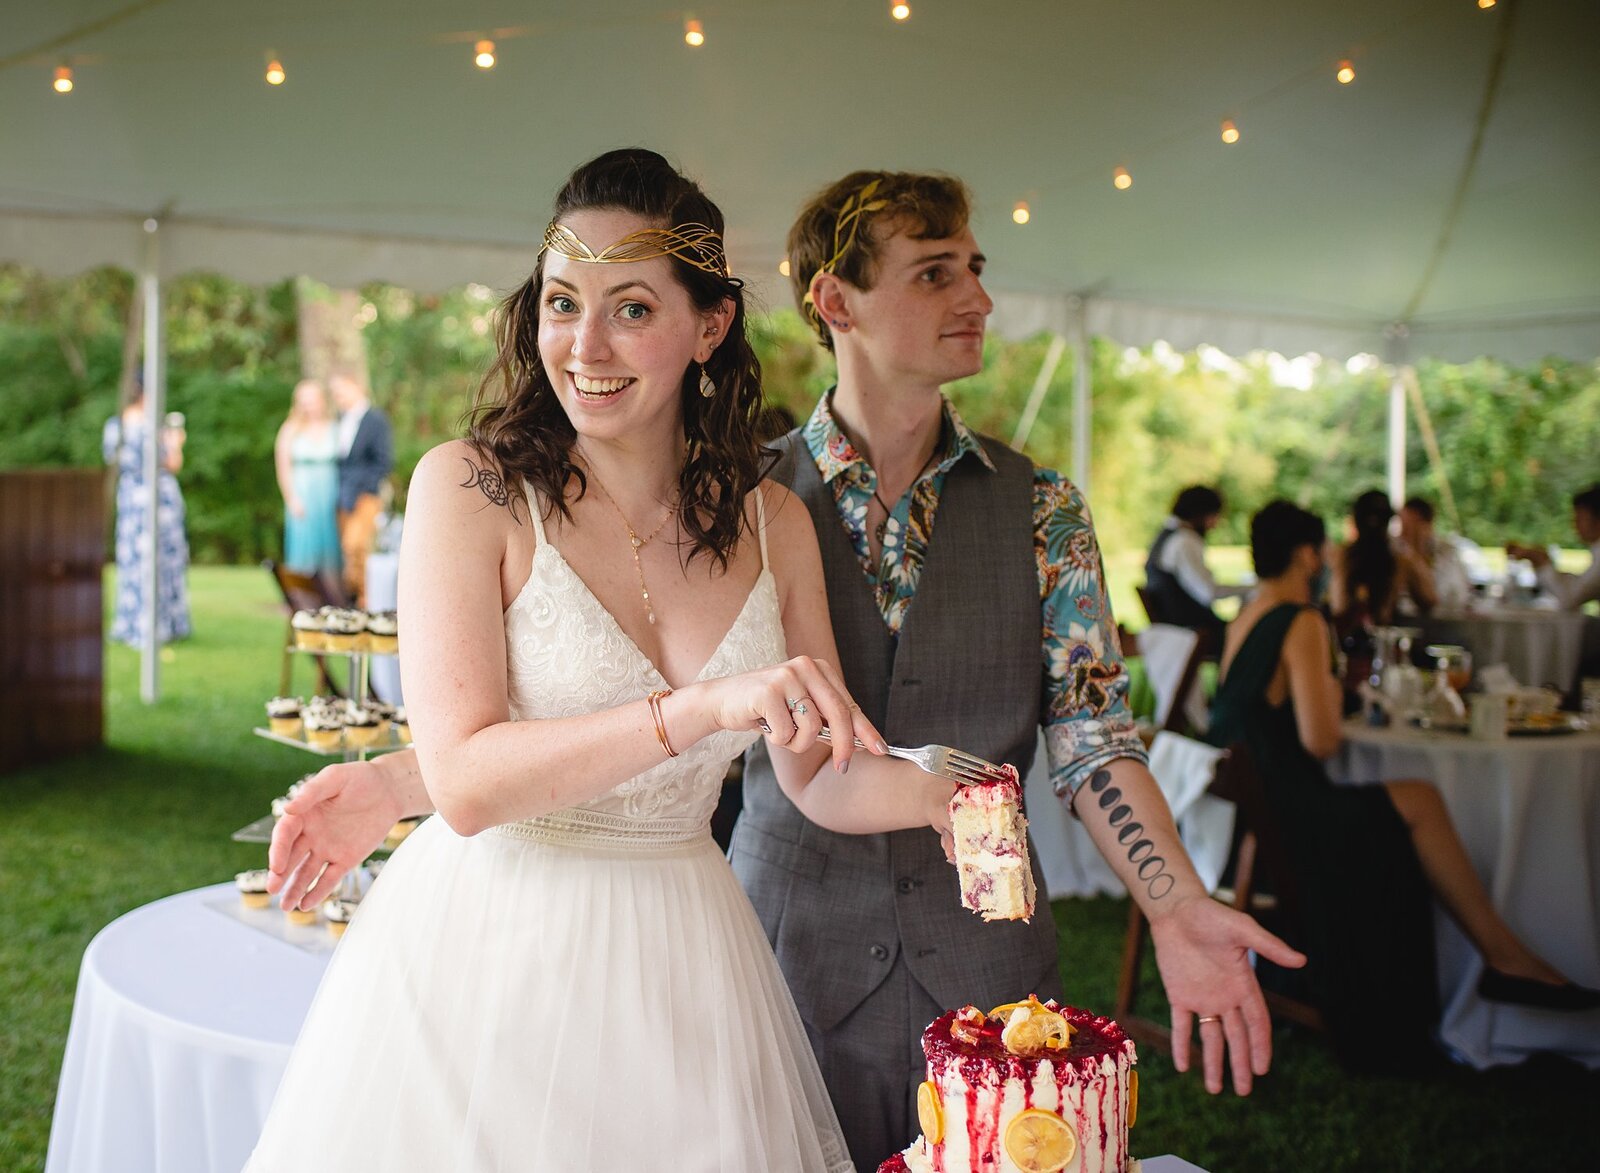 couple cutting cake at intimate wedding